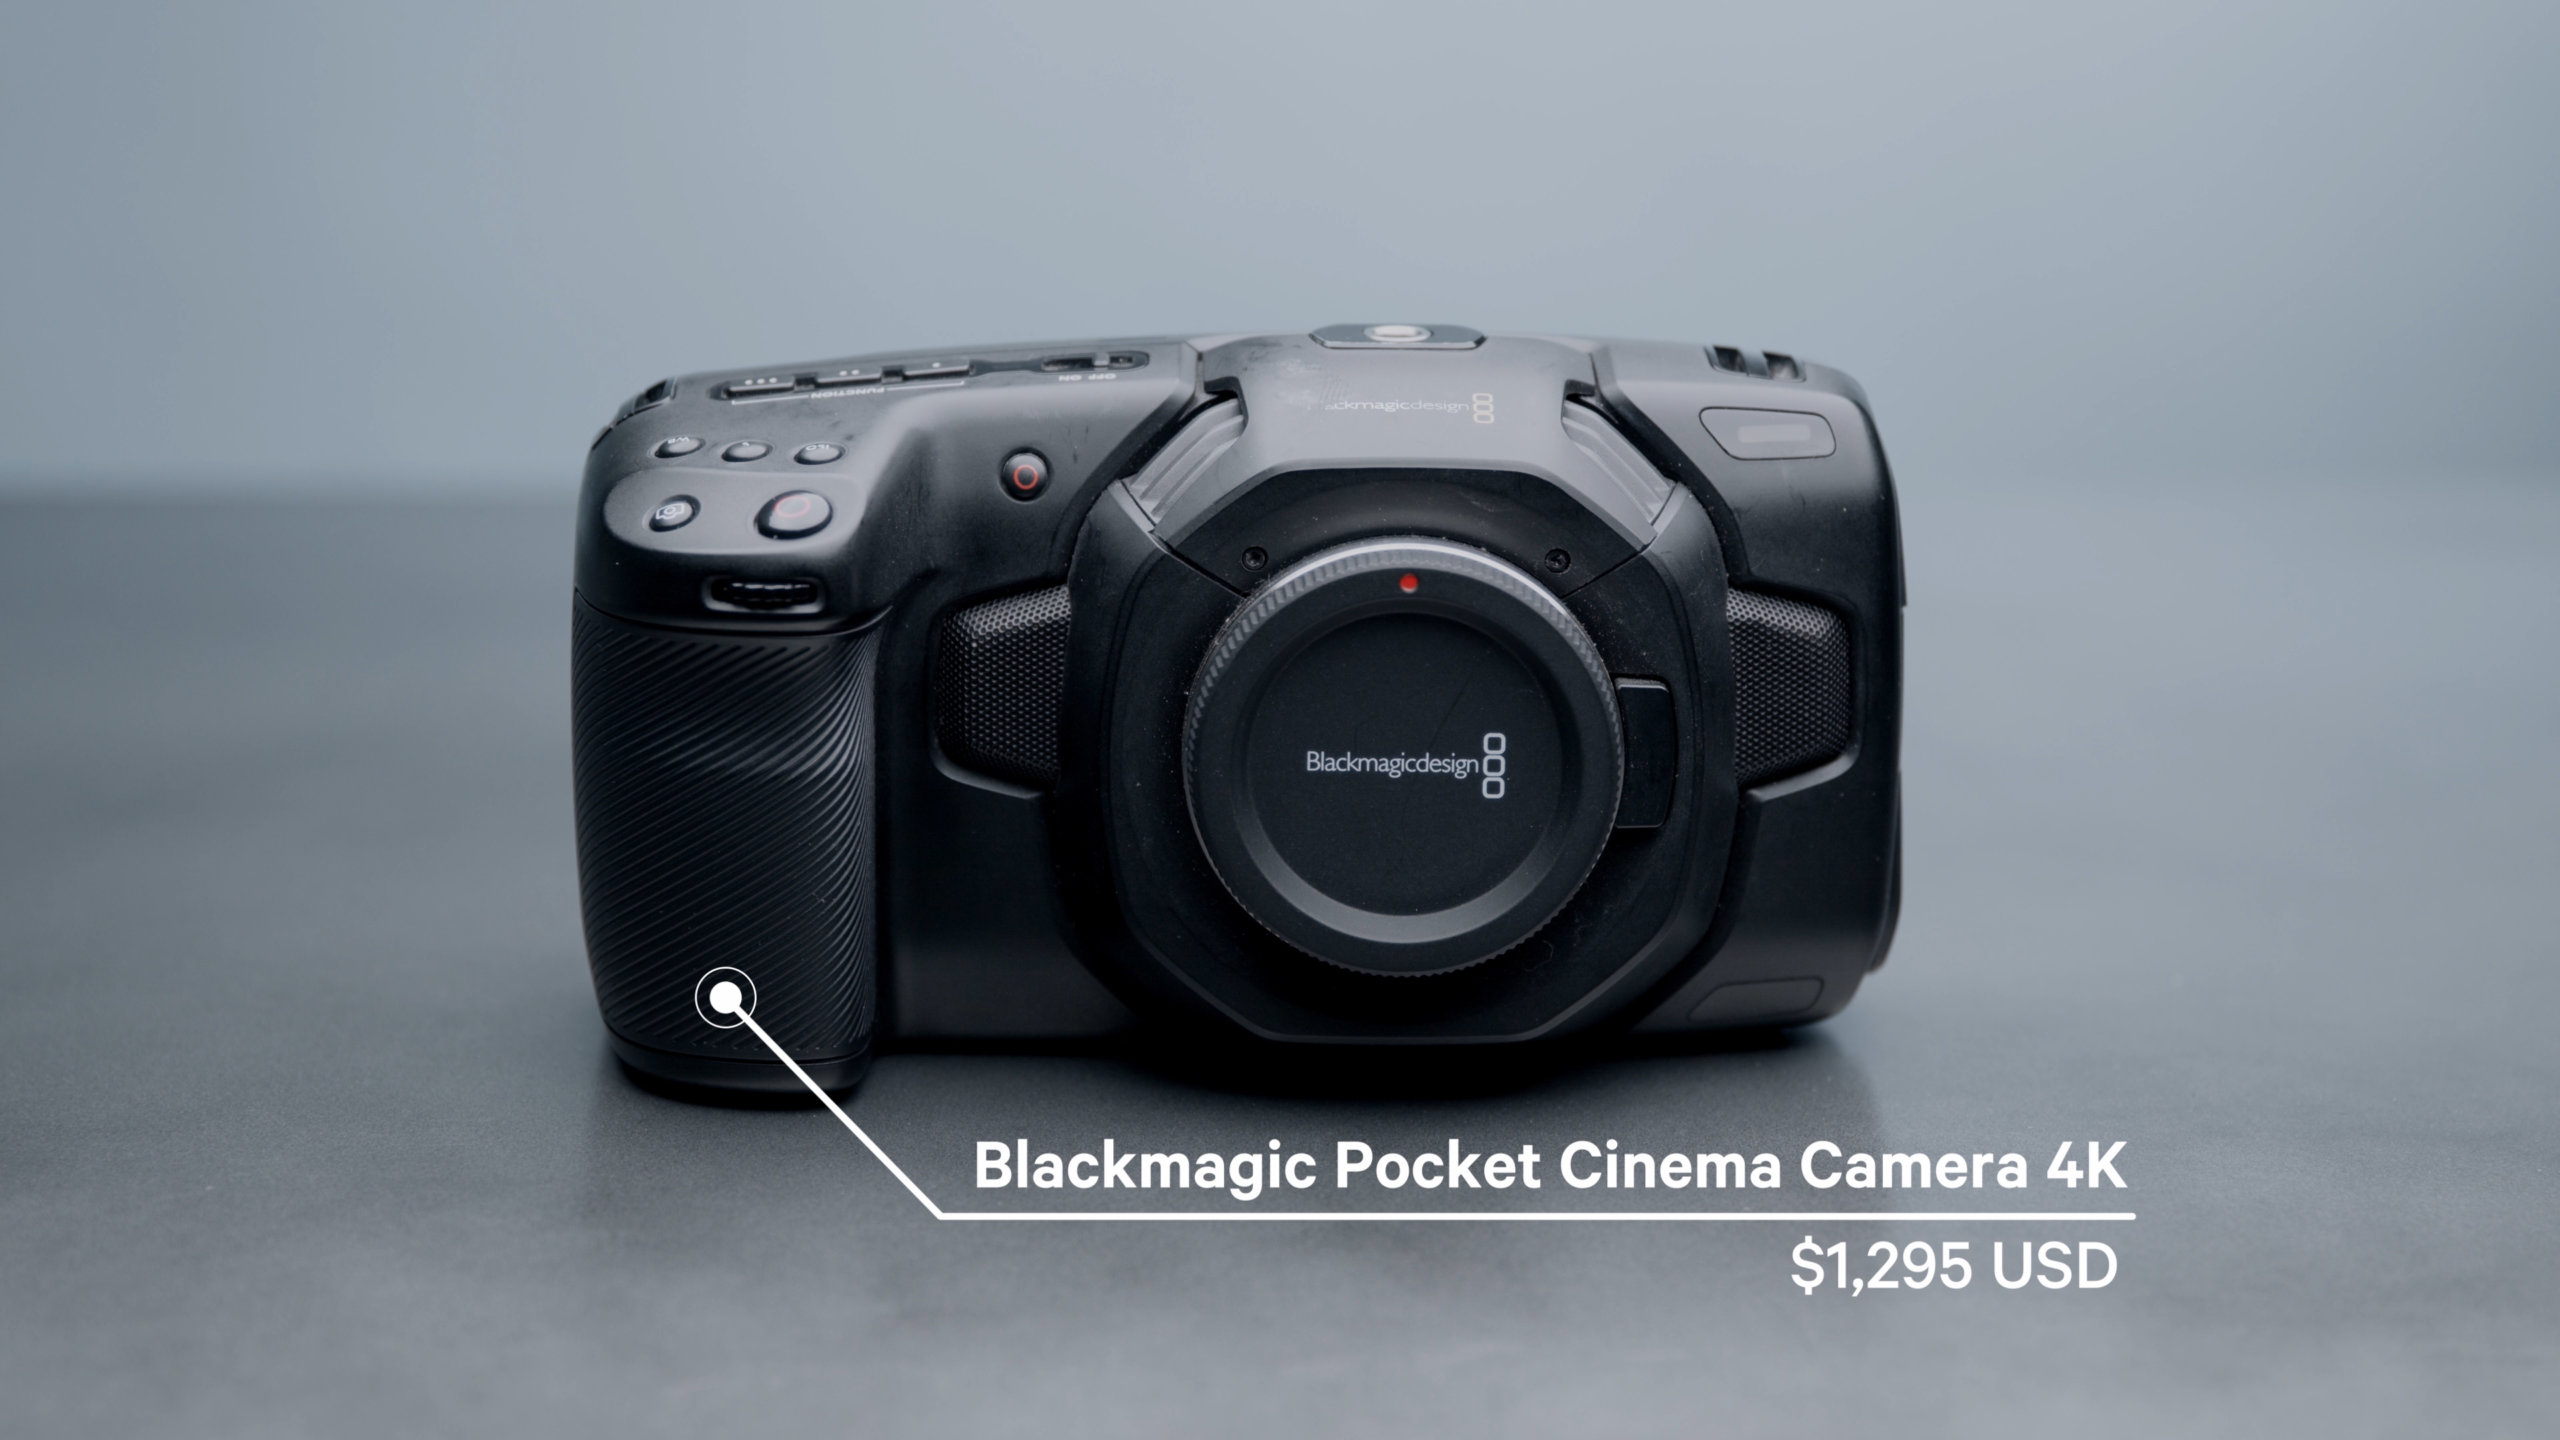 The Blackmagic Pocket Cinema Camera 4K 